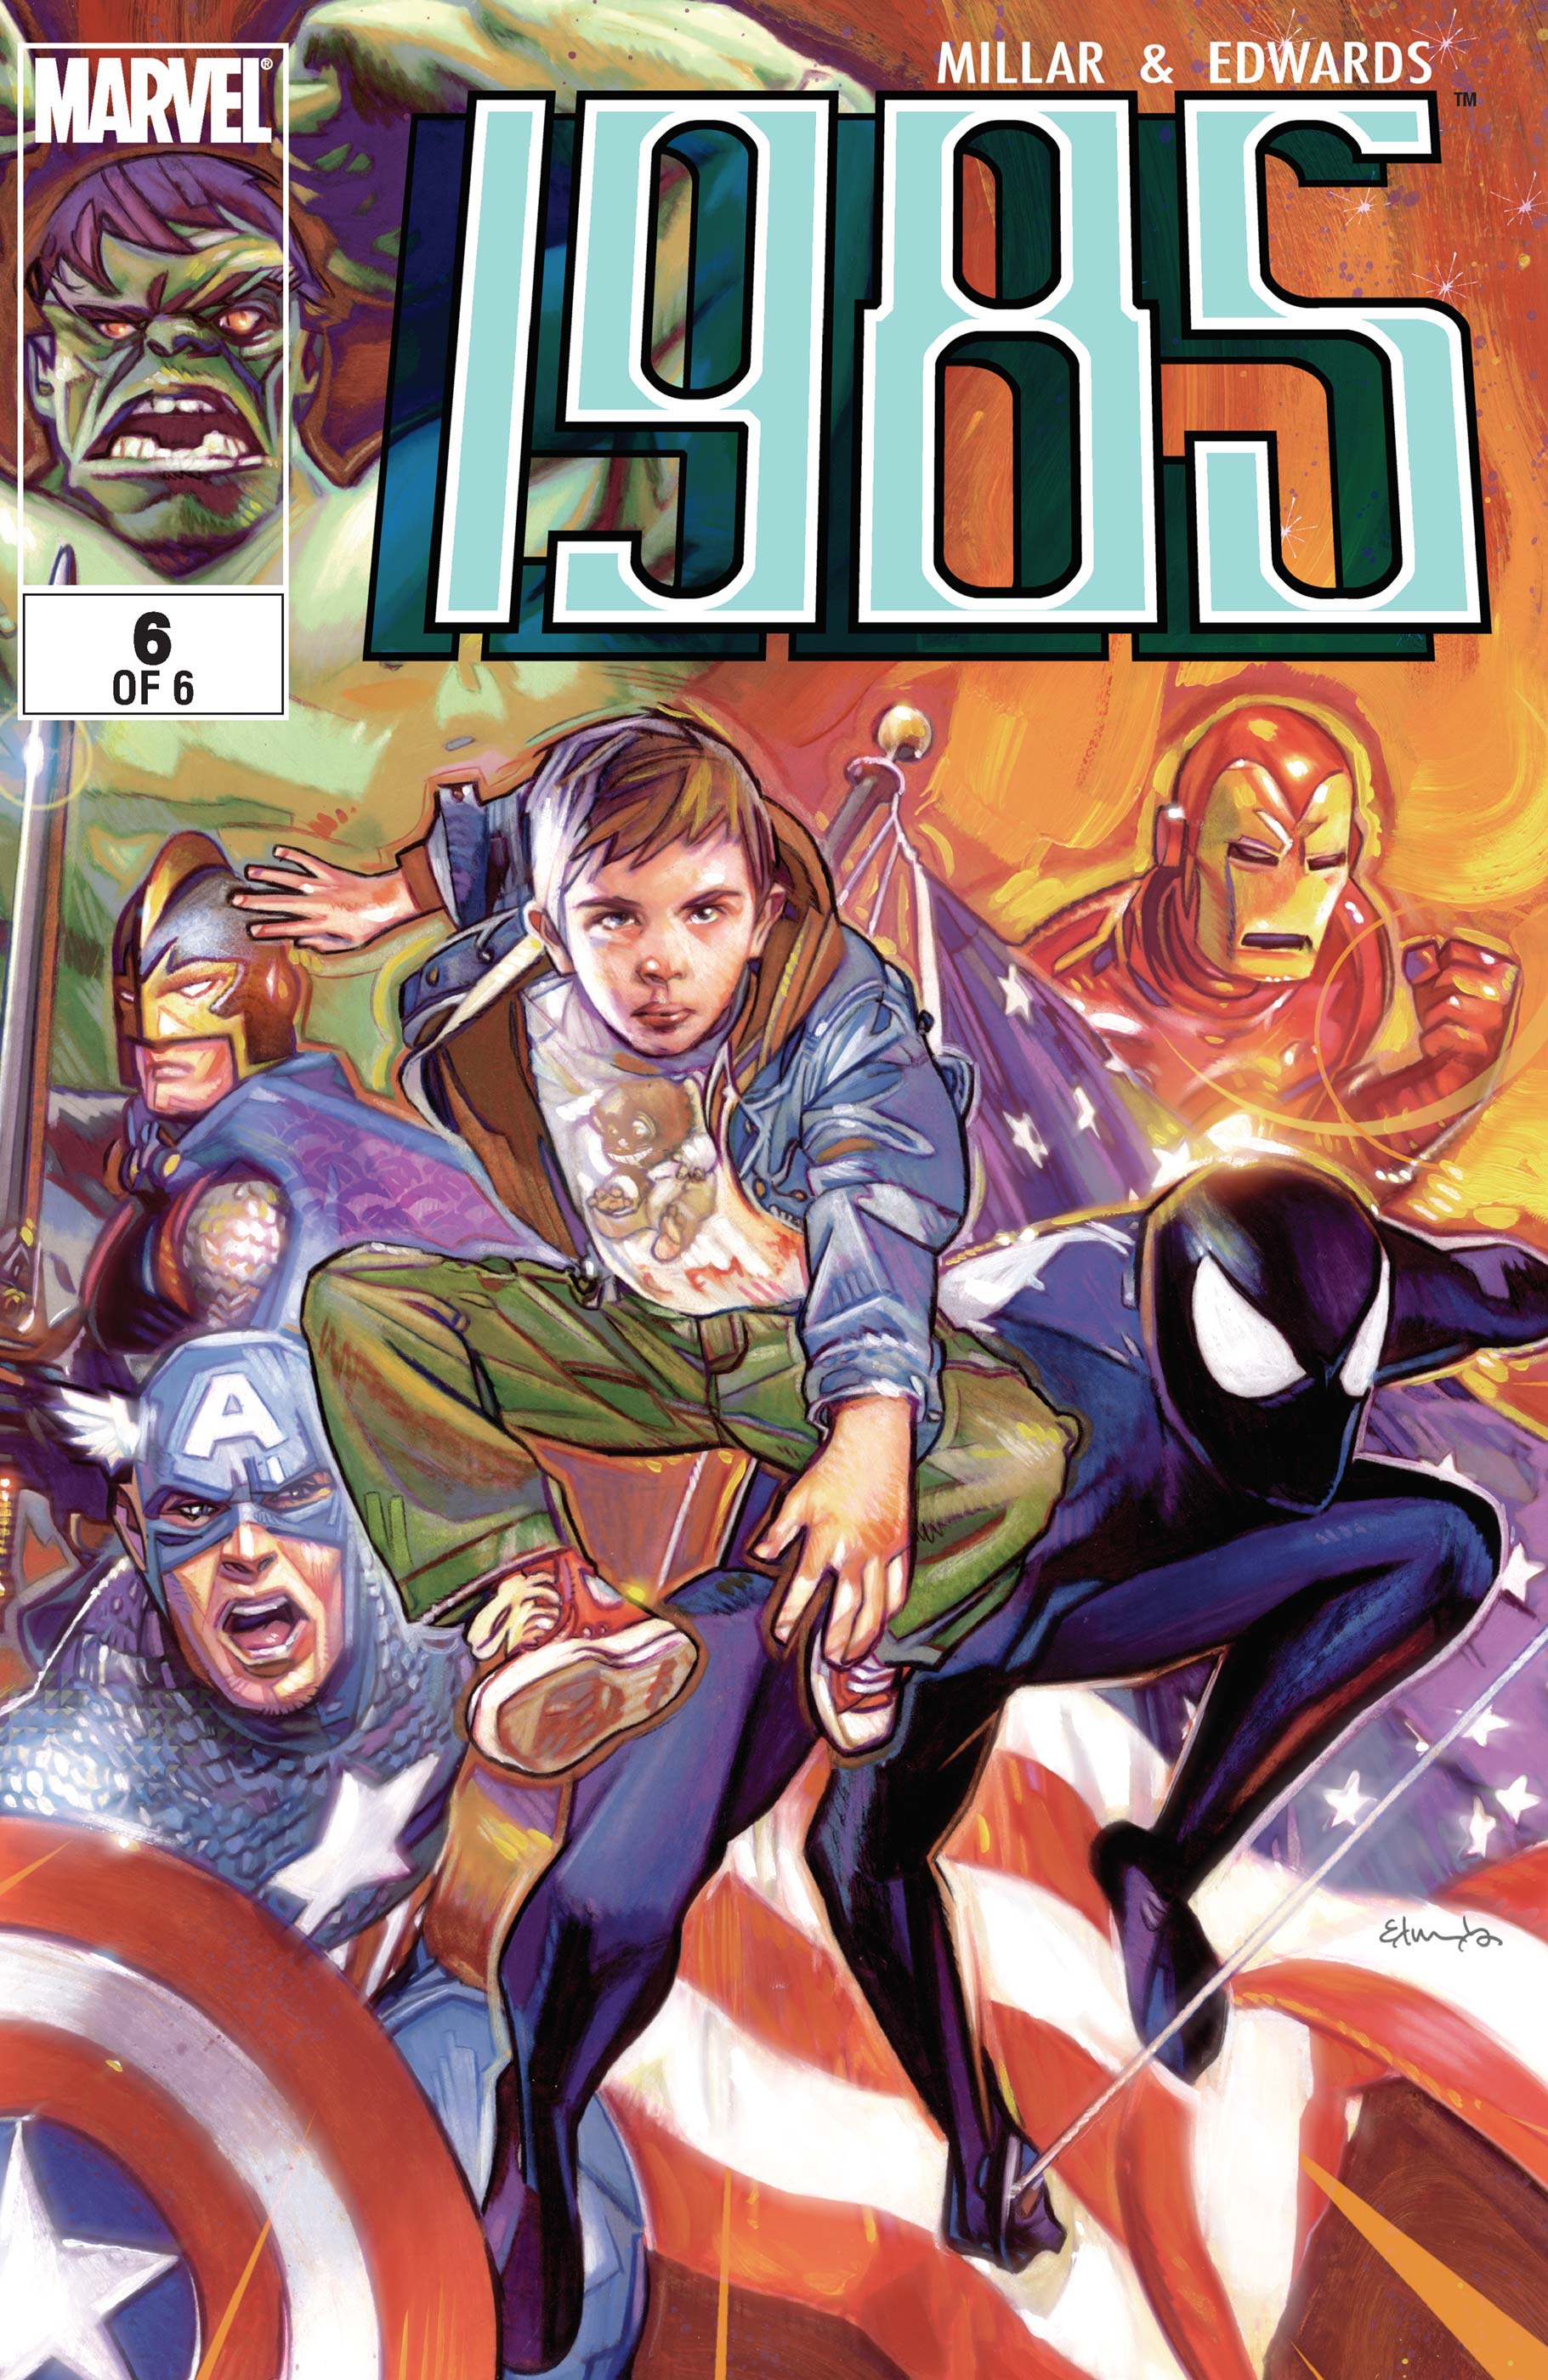 Marvel 1985 (2008) #6